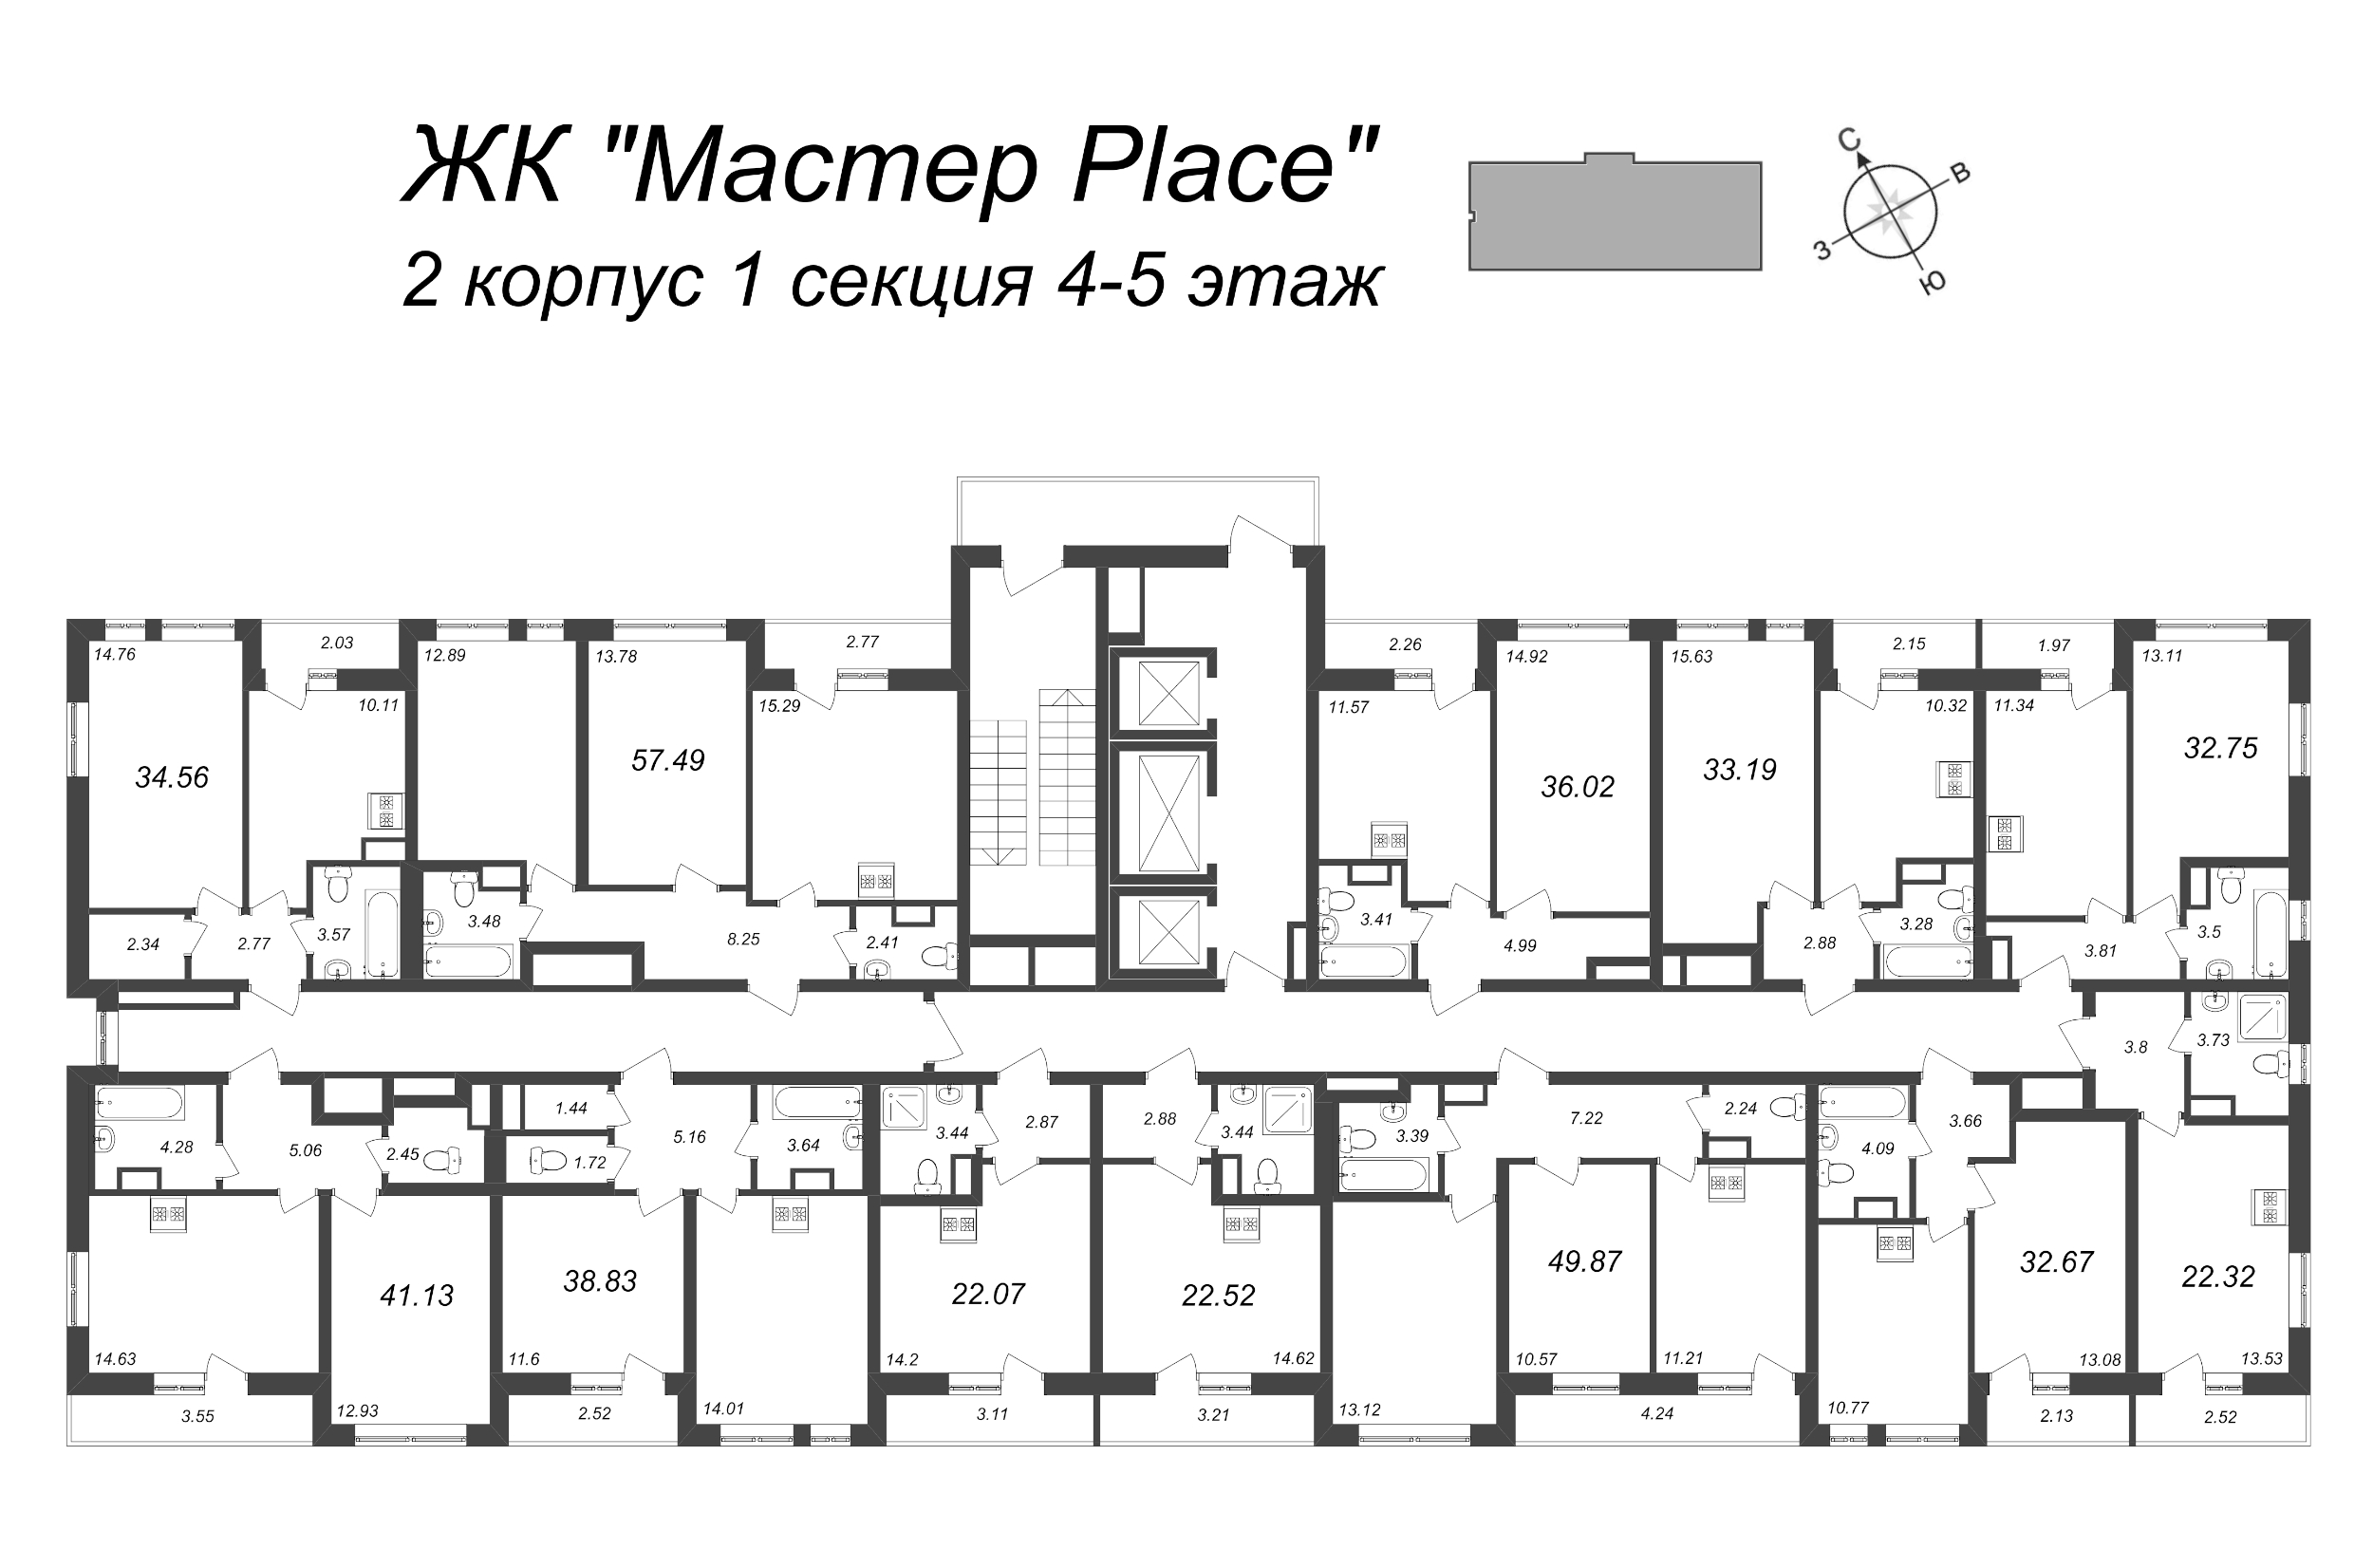 2-комнатная (Евро) квартира, 41.13 м² - планировка этажа